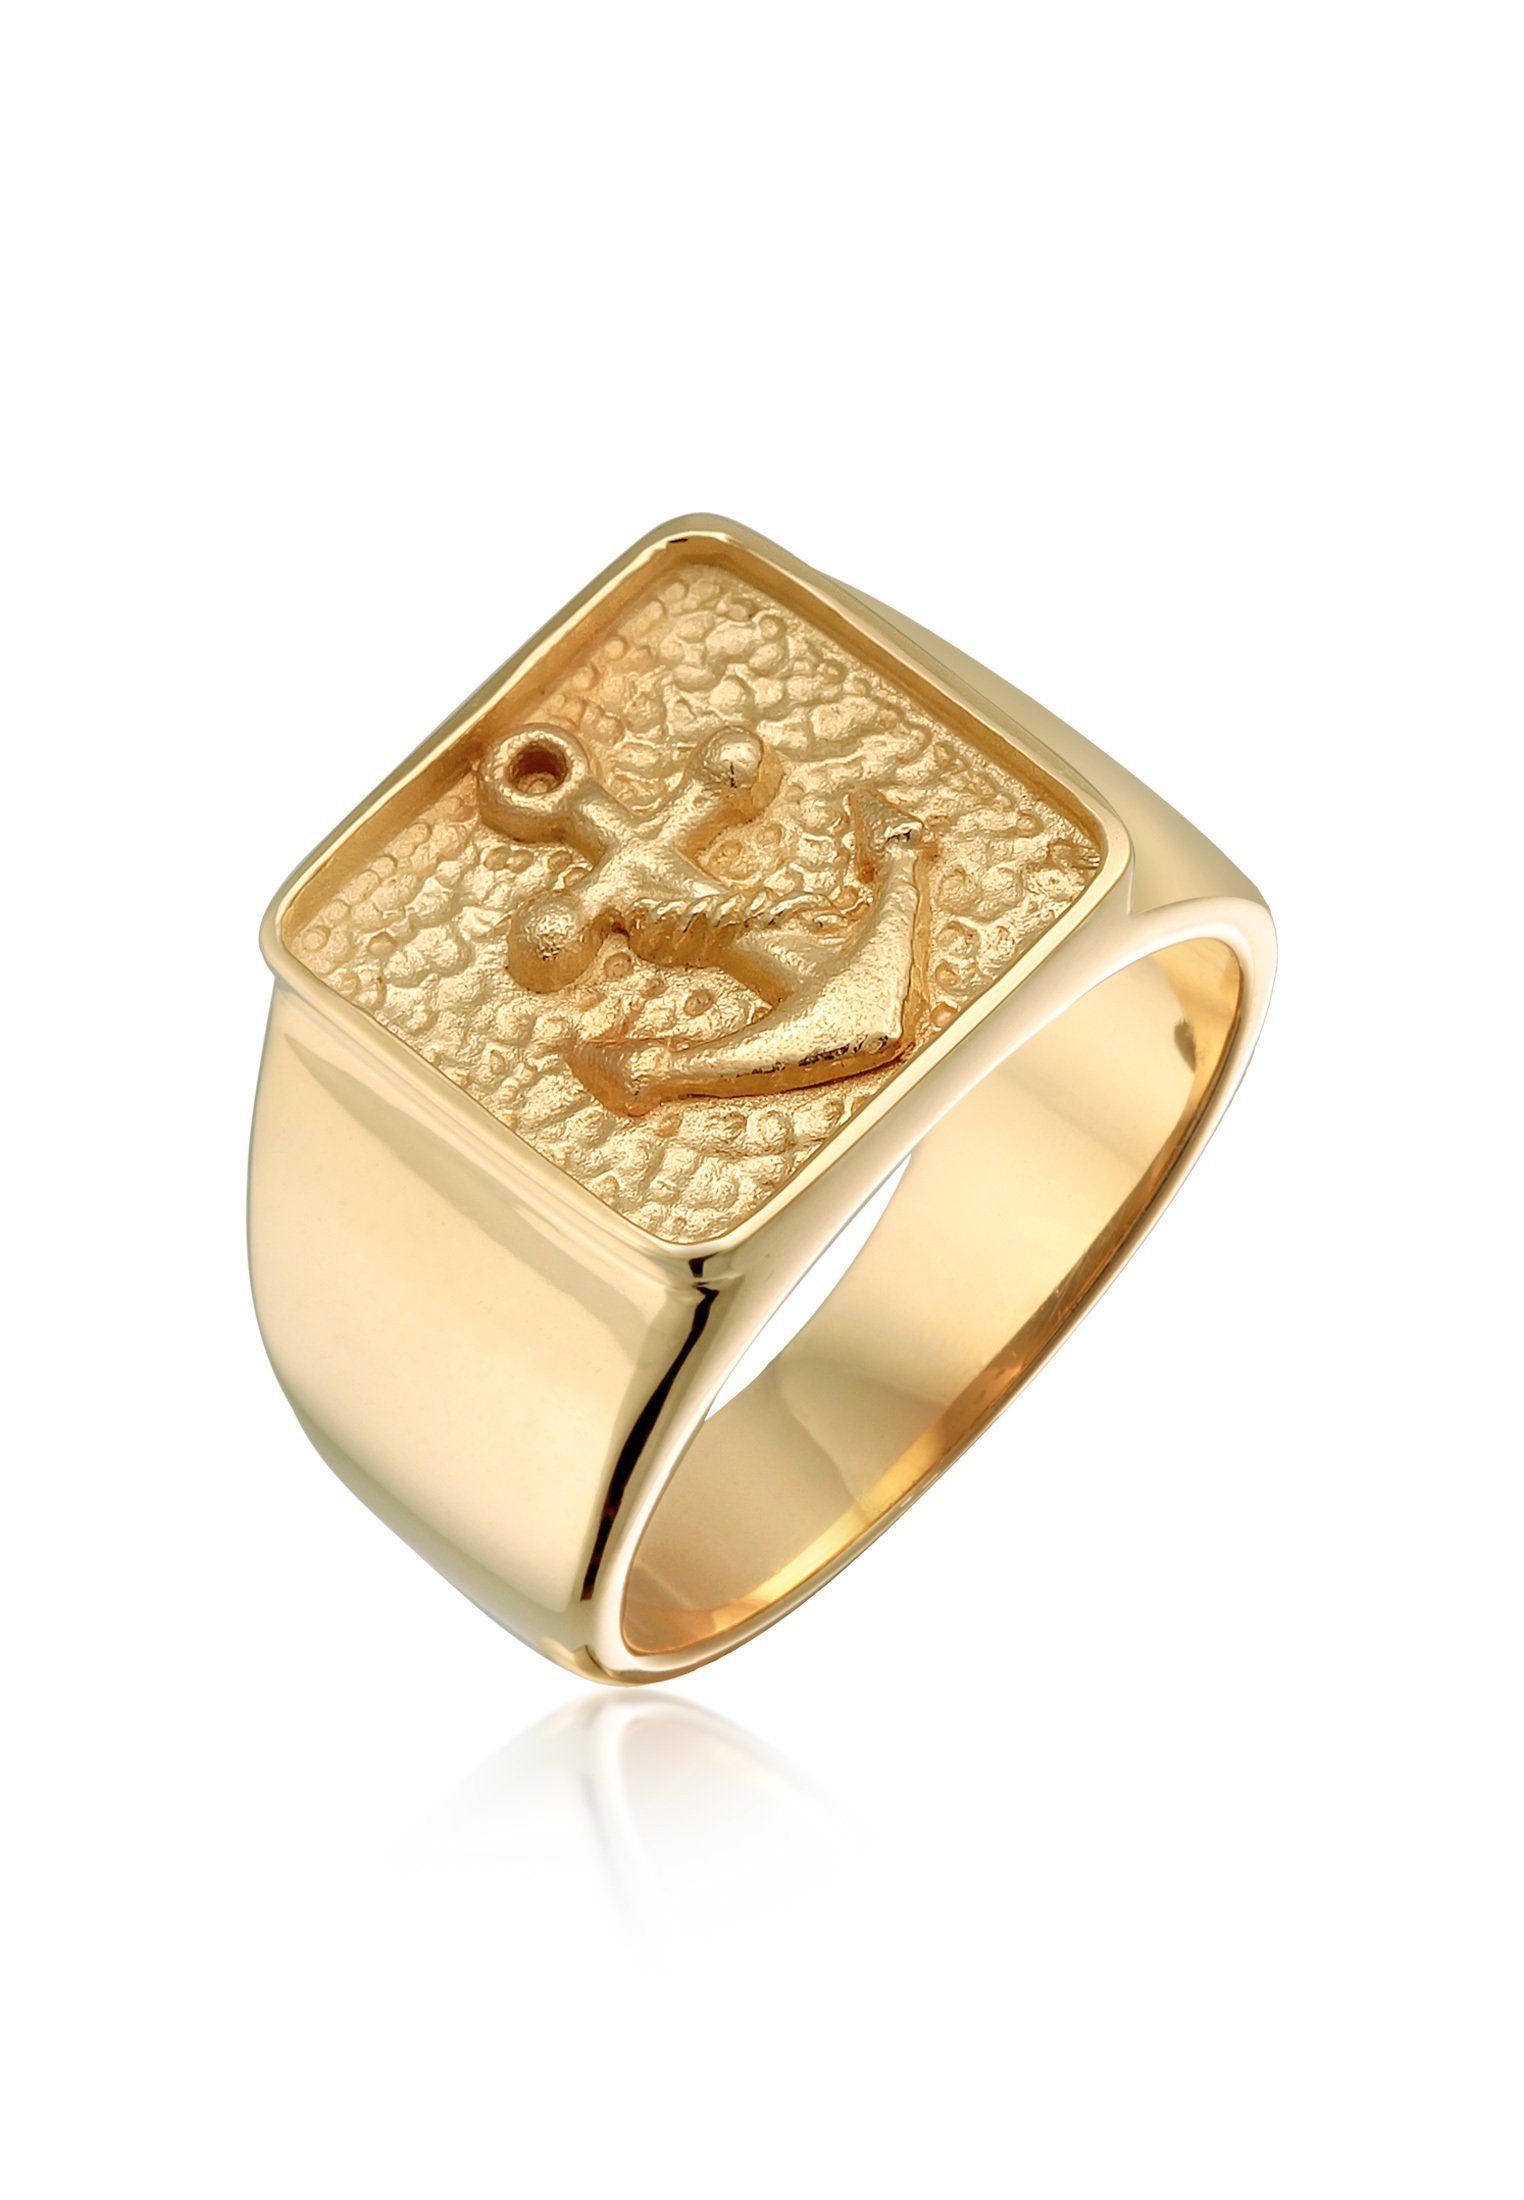 Kuzzoi Siegelring Herren Siegelring Anker Symbol Oxidiert 925 Silber Gold